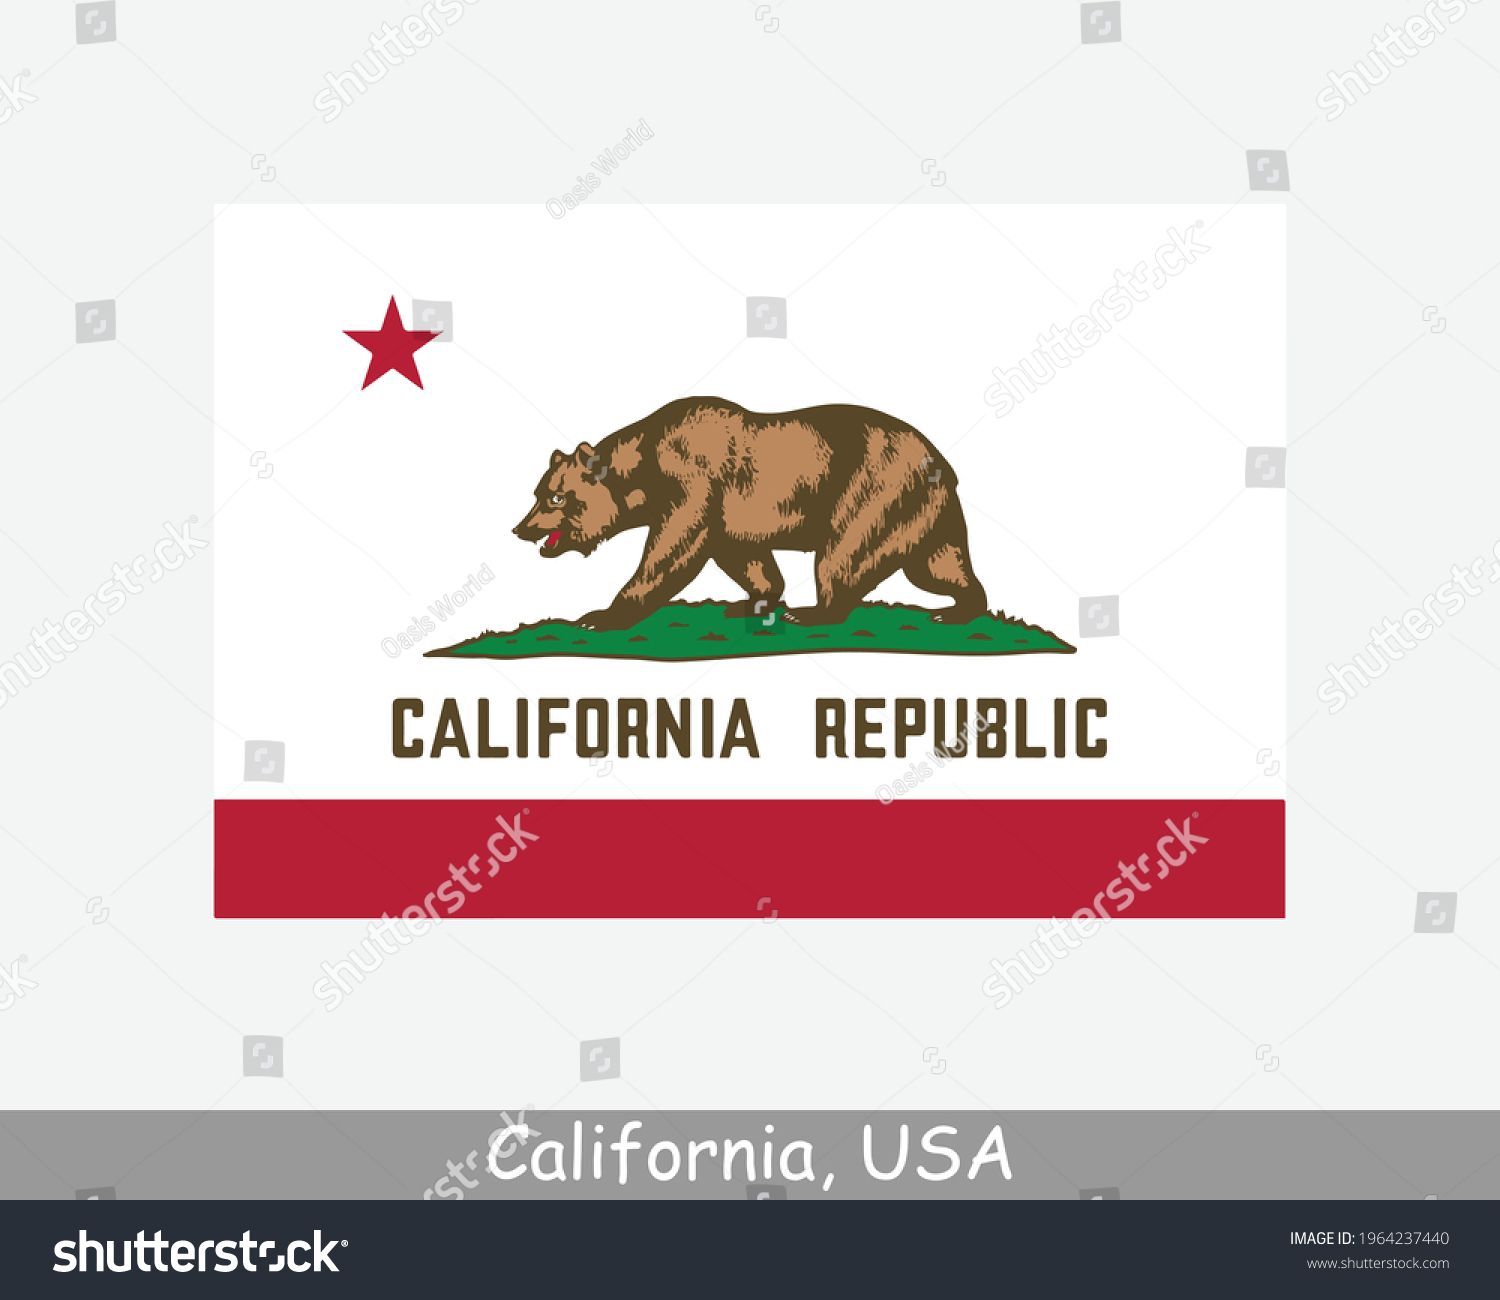 SVG of California USA State Flag. Flag of CA, USA isolated on white background. United States, America, American, United States of America, US State. Vector illustration. svg